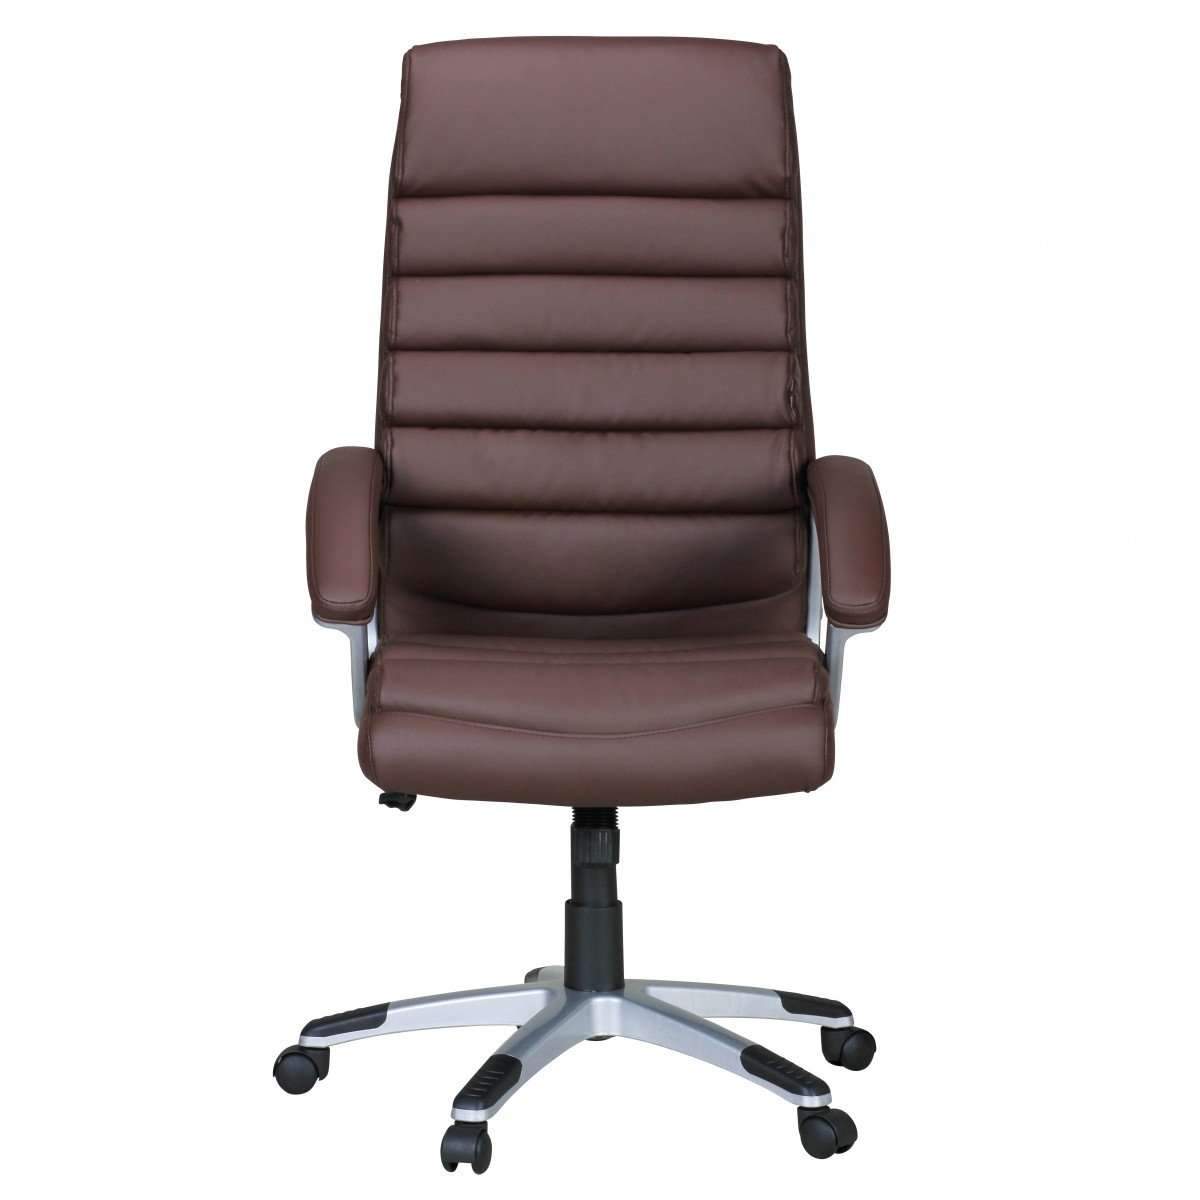 Nancy's Clason Point Luxury Office Chair - Executive Chair - Ergonomic - Gaming Chair - Office chairs